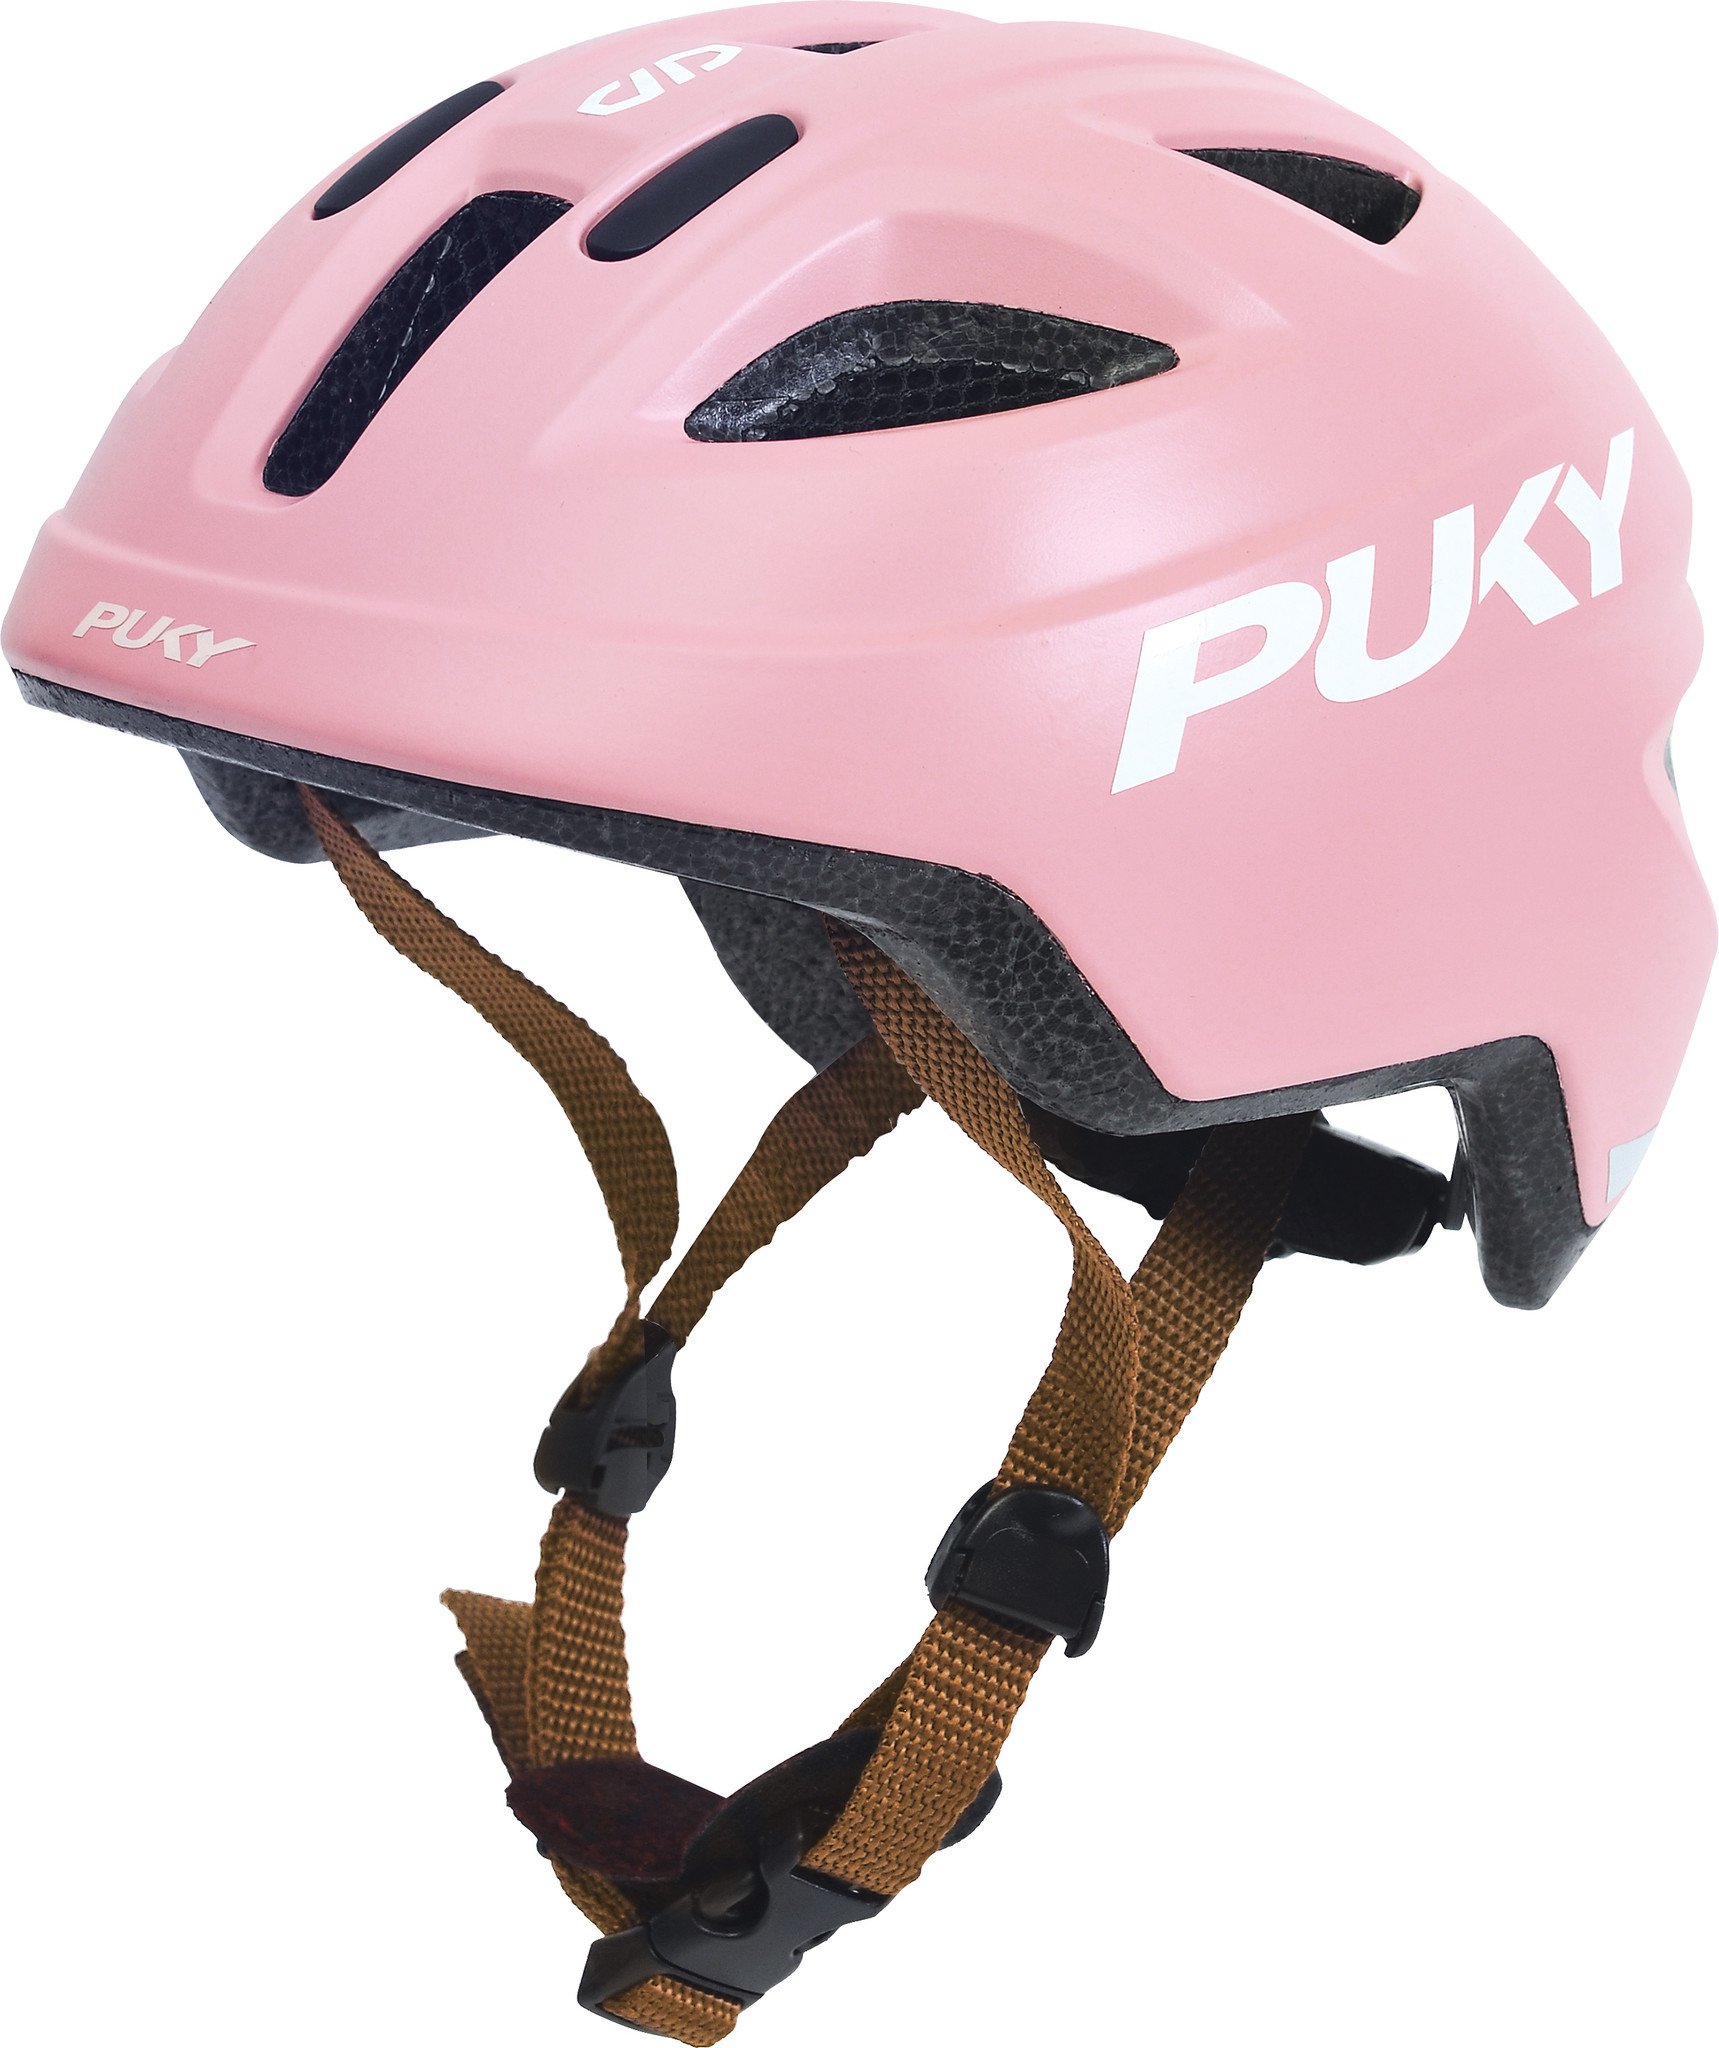 rol hoofdpijn Giftig Puky fietshelm Pro retro roze medium (51-56cm) - Kinderfietsshop.nl